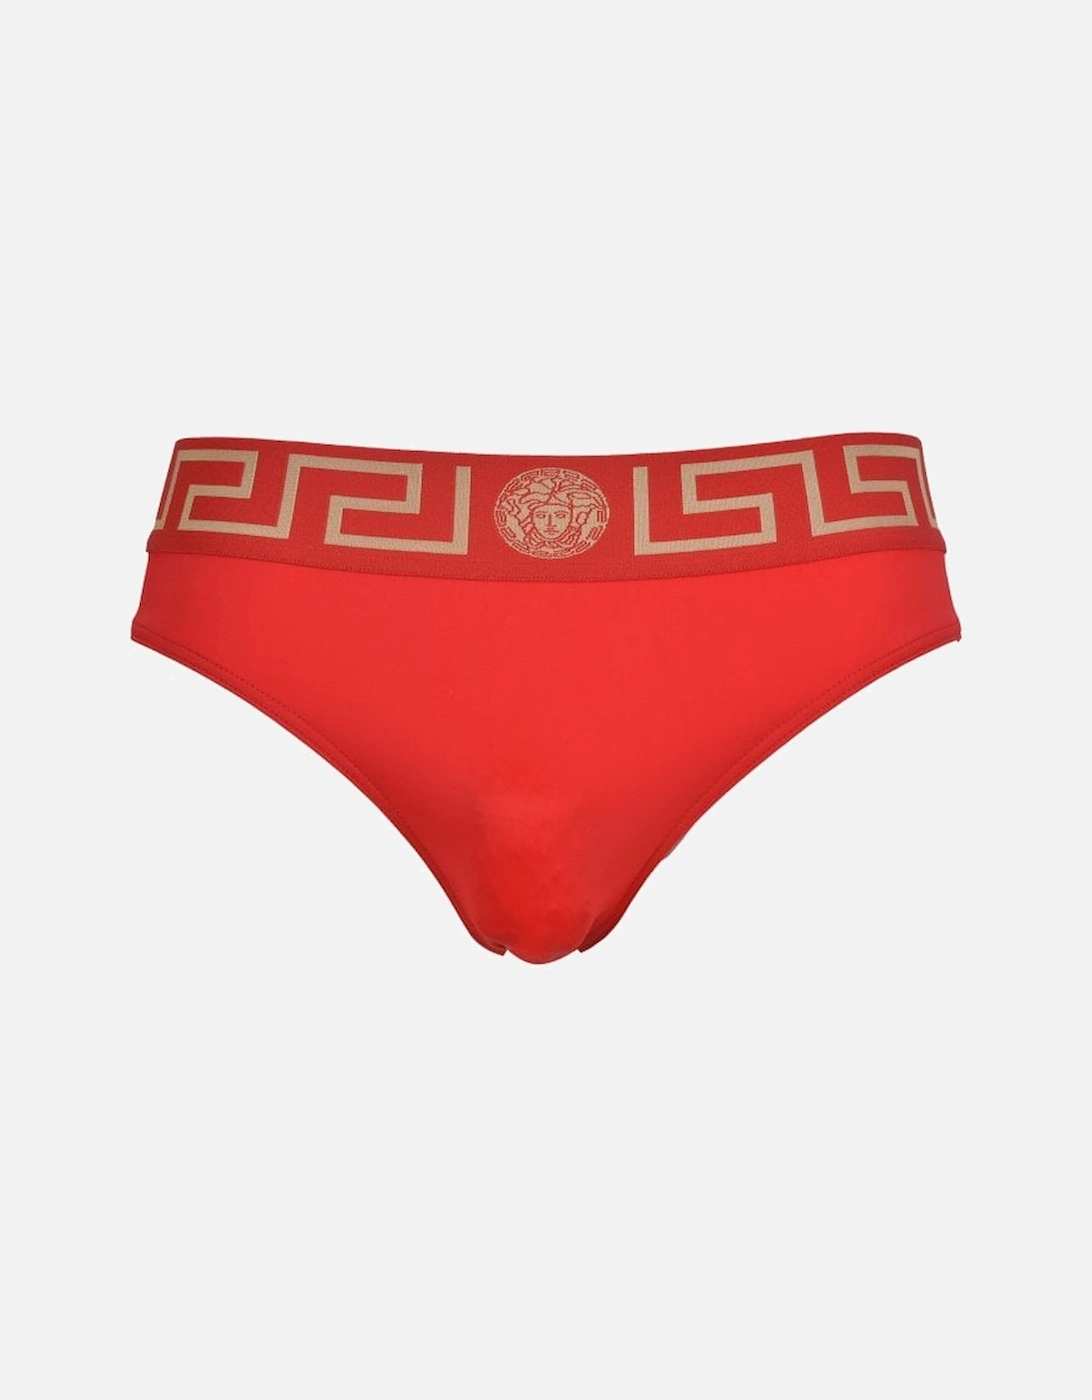 Iconic Greca Luxe Swim Briefs, Red/gold, 6 of 5